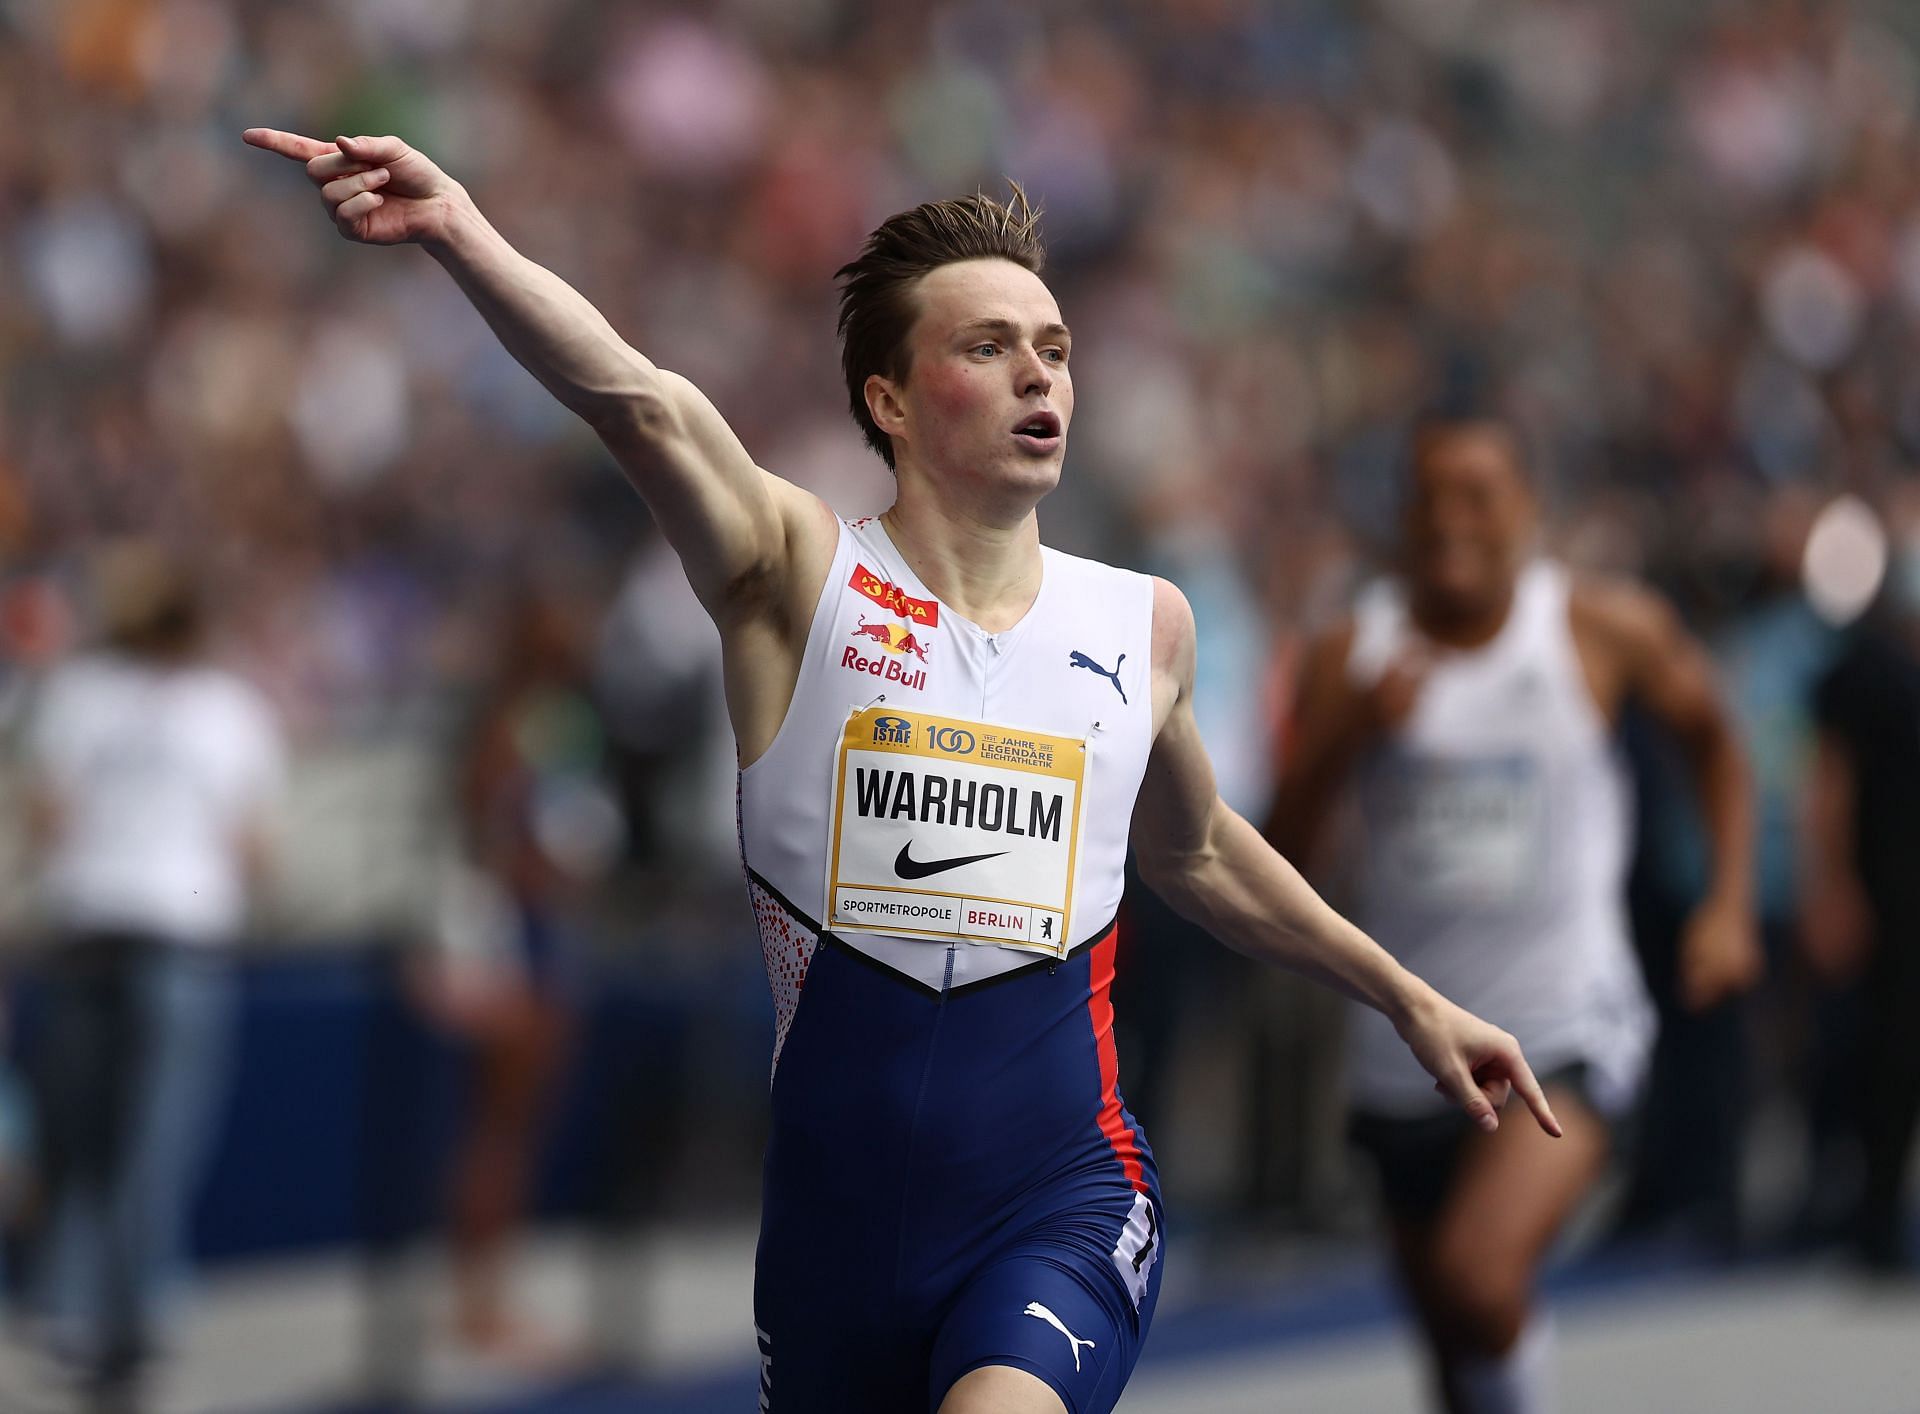 Karsten Warholm won gold at the Tokyo Olympics in 400m hurdles.